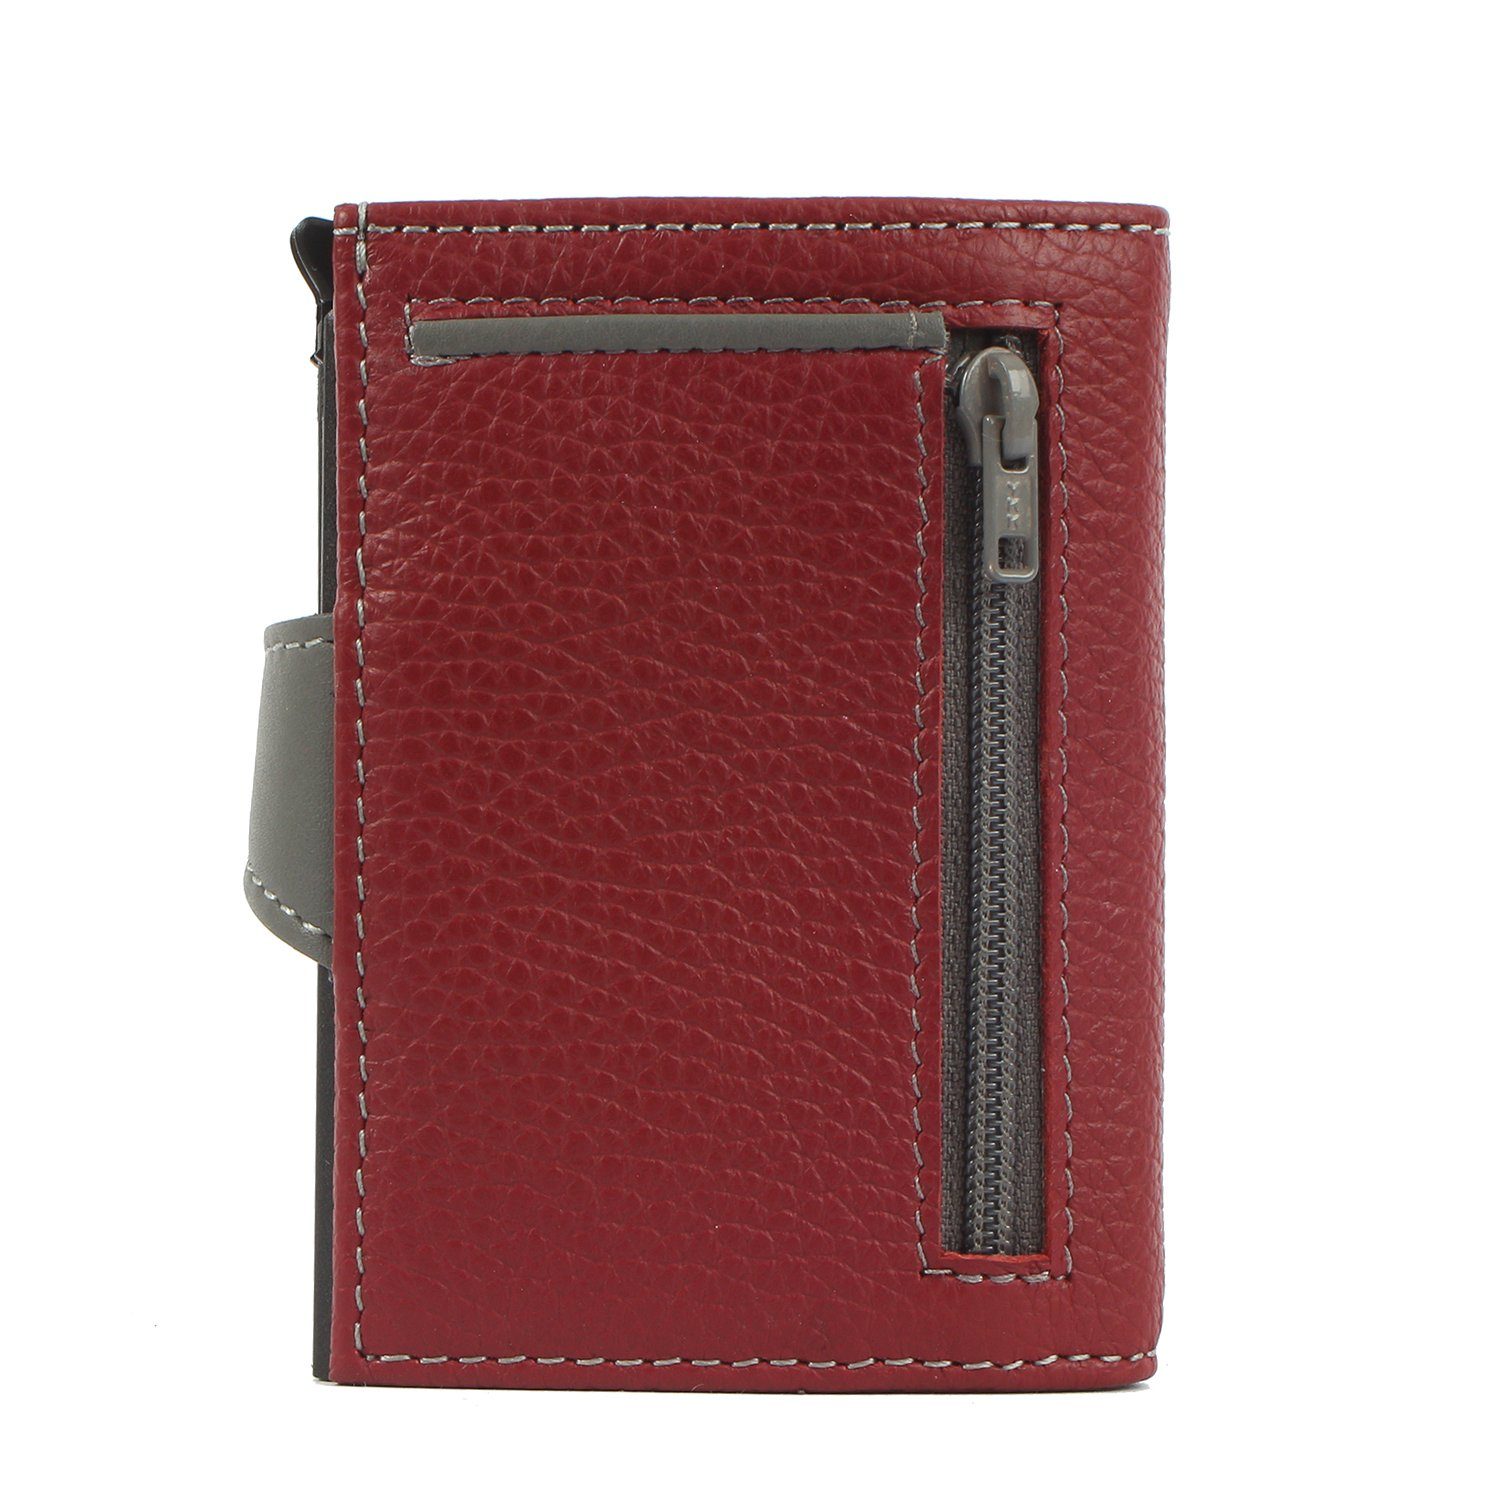 karminrot double noonyu Leder Kreditkartenbörse aus Upcycling Mini RFID Margelisch leather, Geldbörse